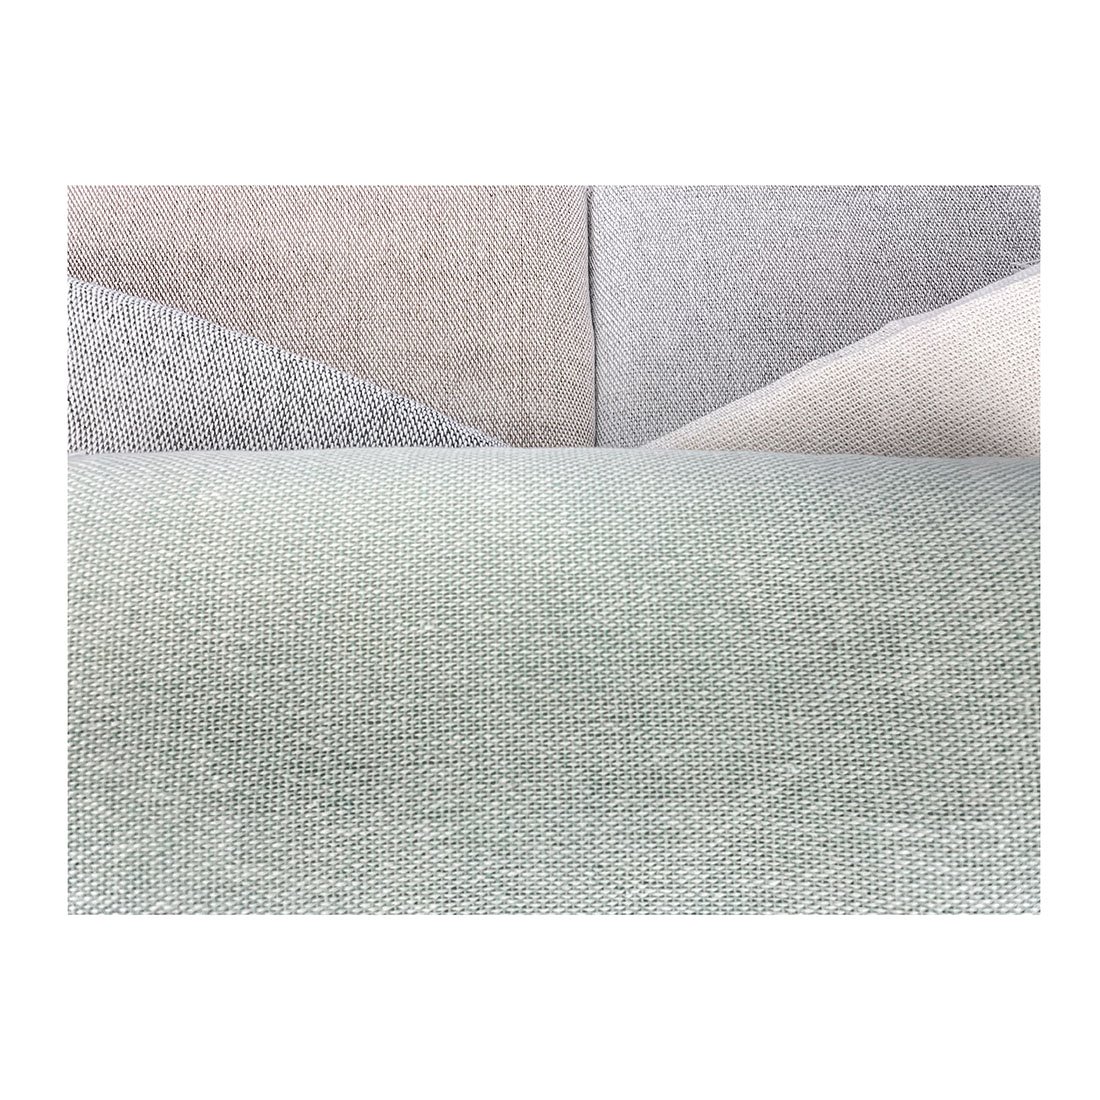 Acomoda Textil – Colcha Multiusos para Sofá y Cama, Manta Foulard